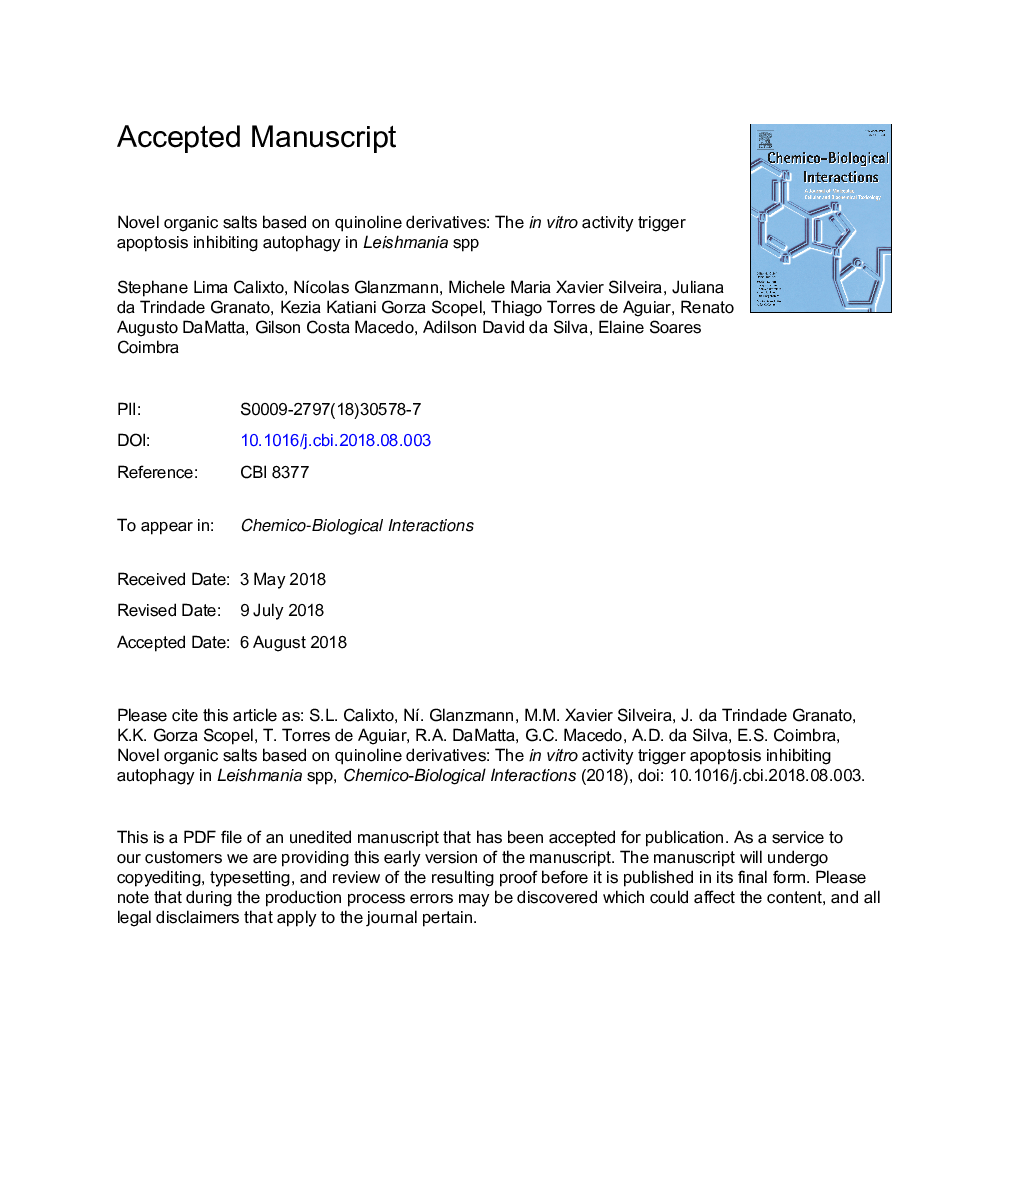 Novel organic salts based on quinoline derivatives: The in vitro activity trigger apoptosis inhibiting autophagy in Leishmania spp.